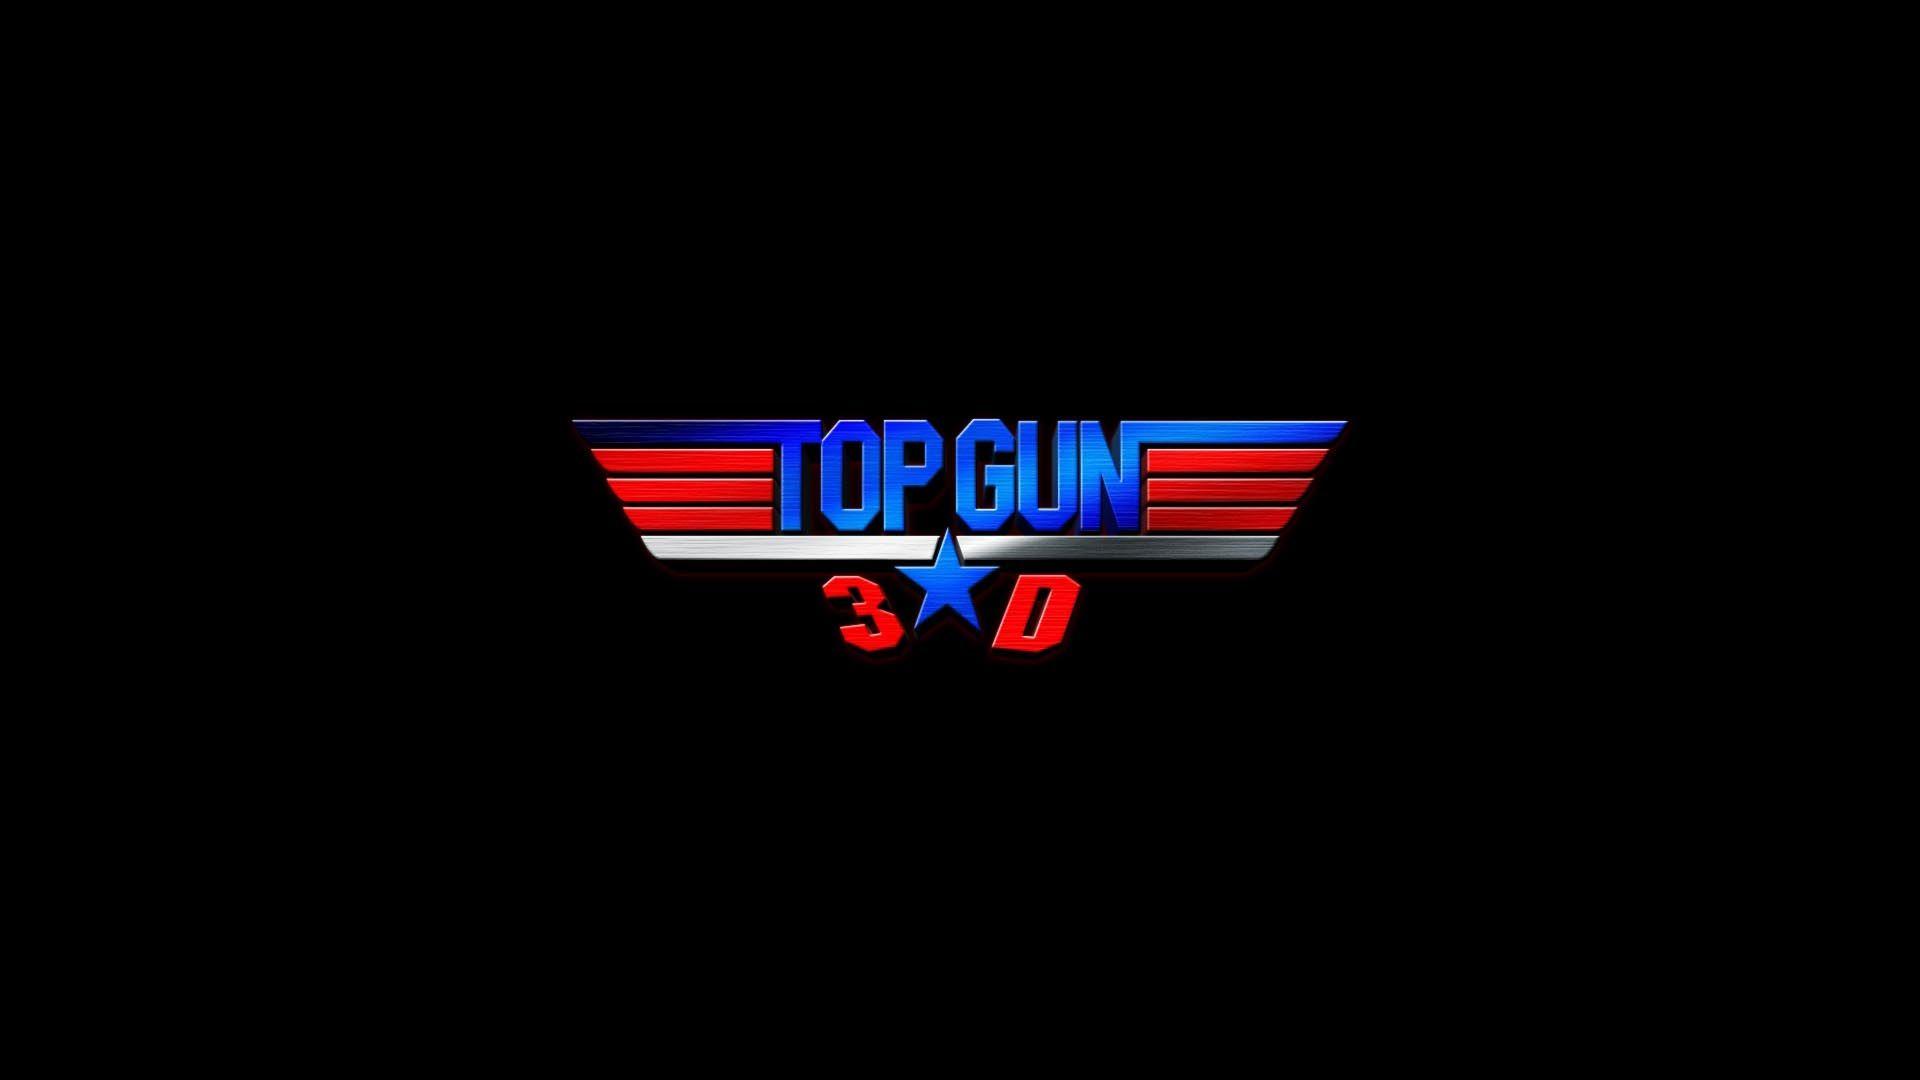 Top Gun Full HD Wallpaper and Background Imagex1080